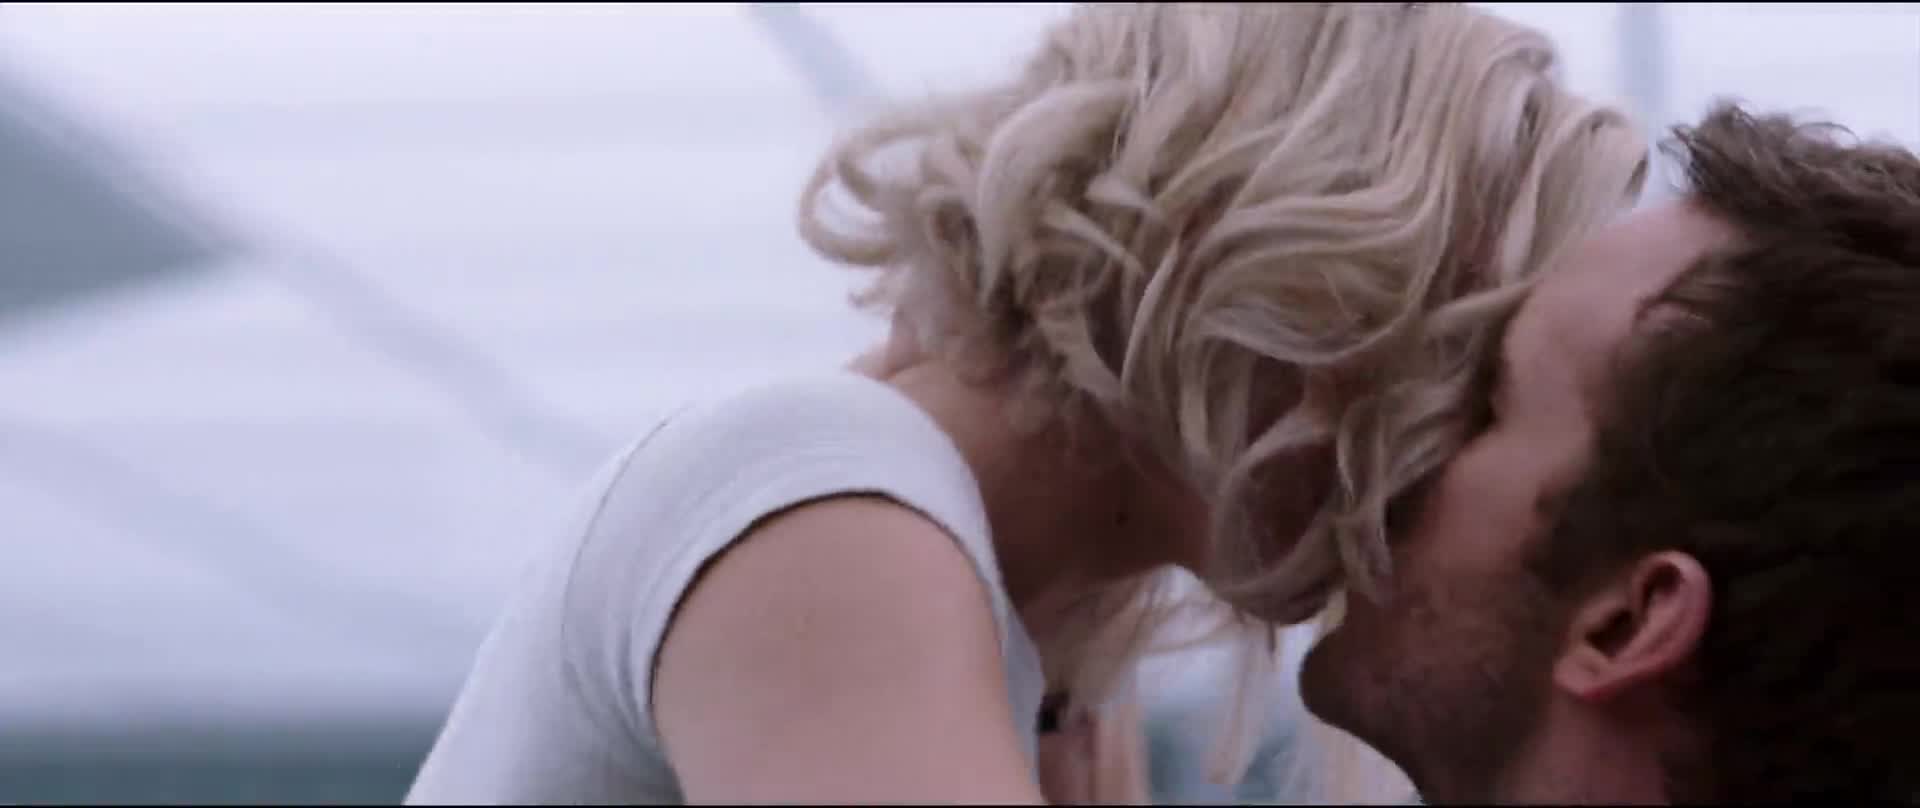 Jennifer Lawrence sex scene with Chris Pratt from Passengers